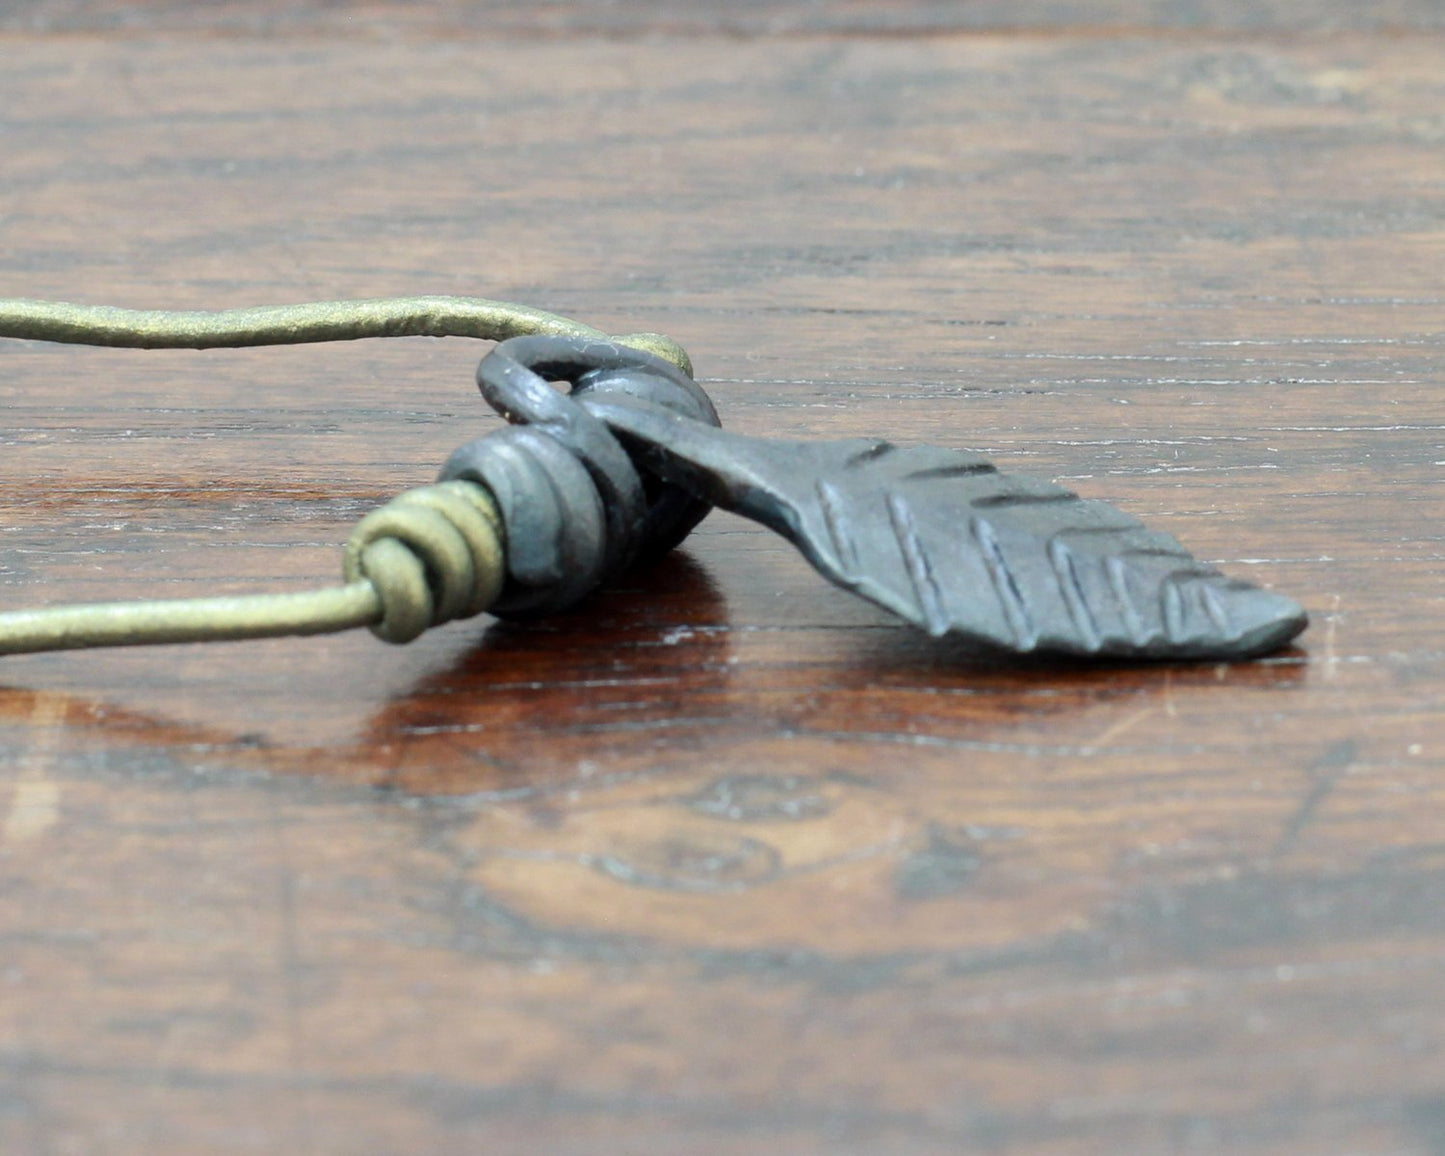 Forged Iron Black Leaf Pendant